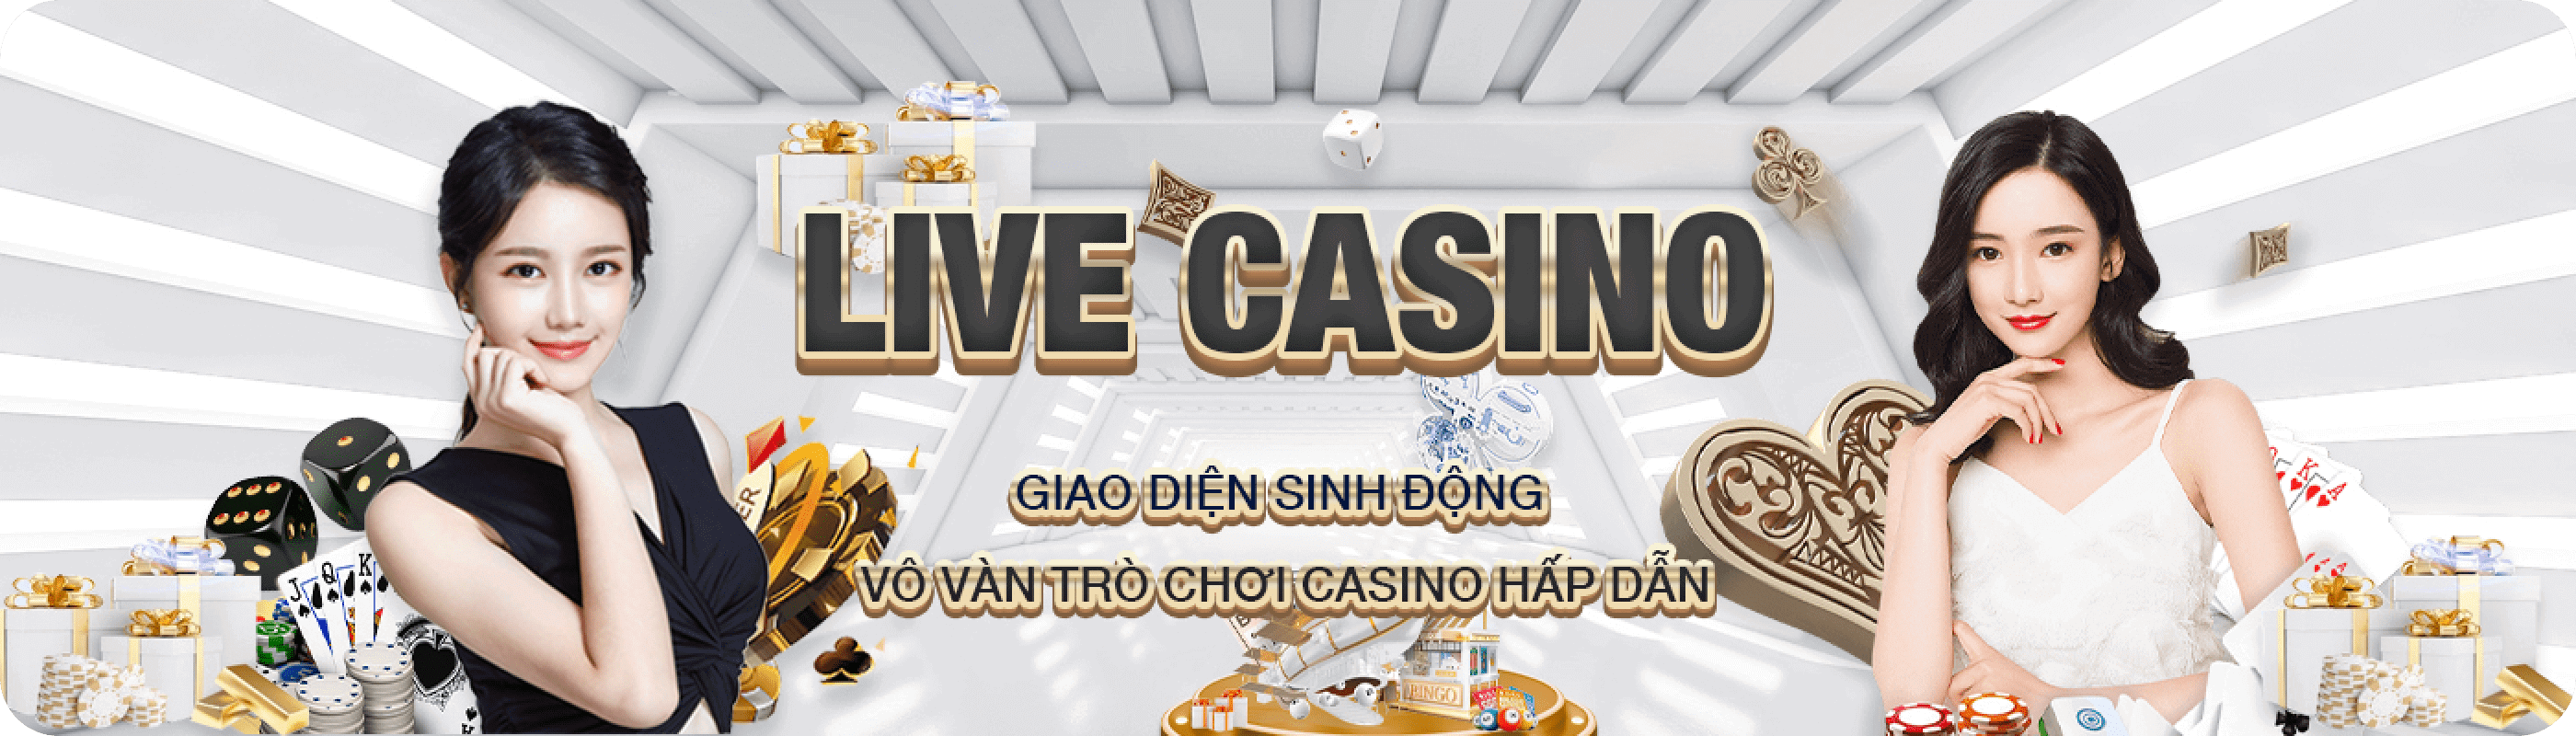 Banner sanh casino